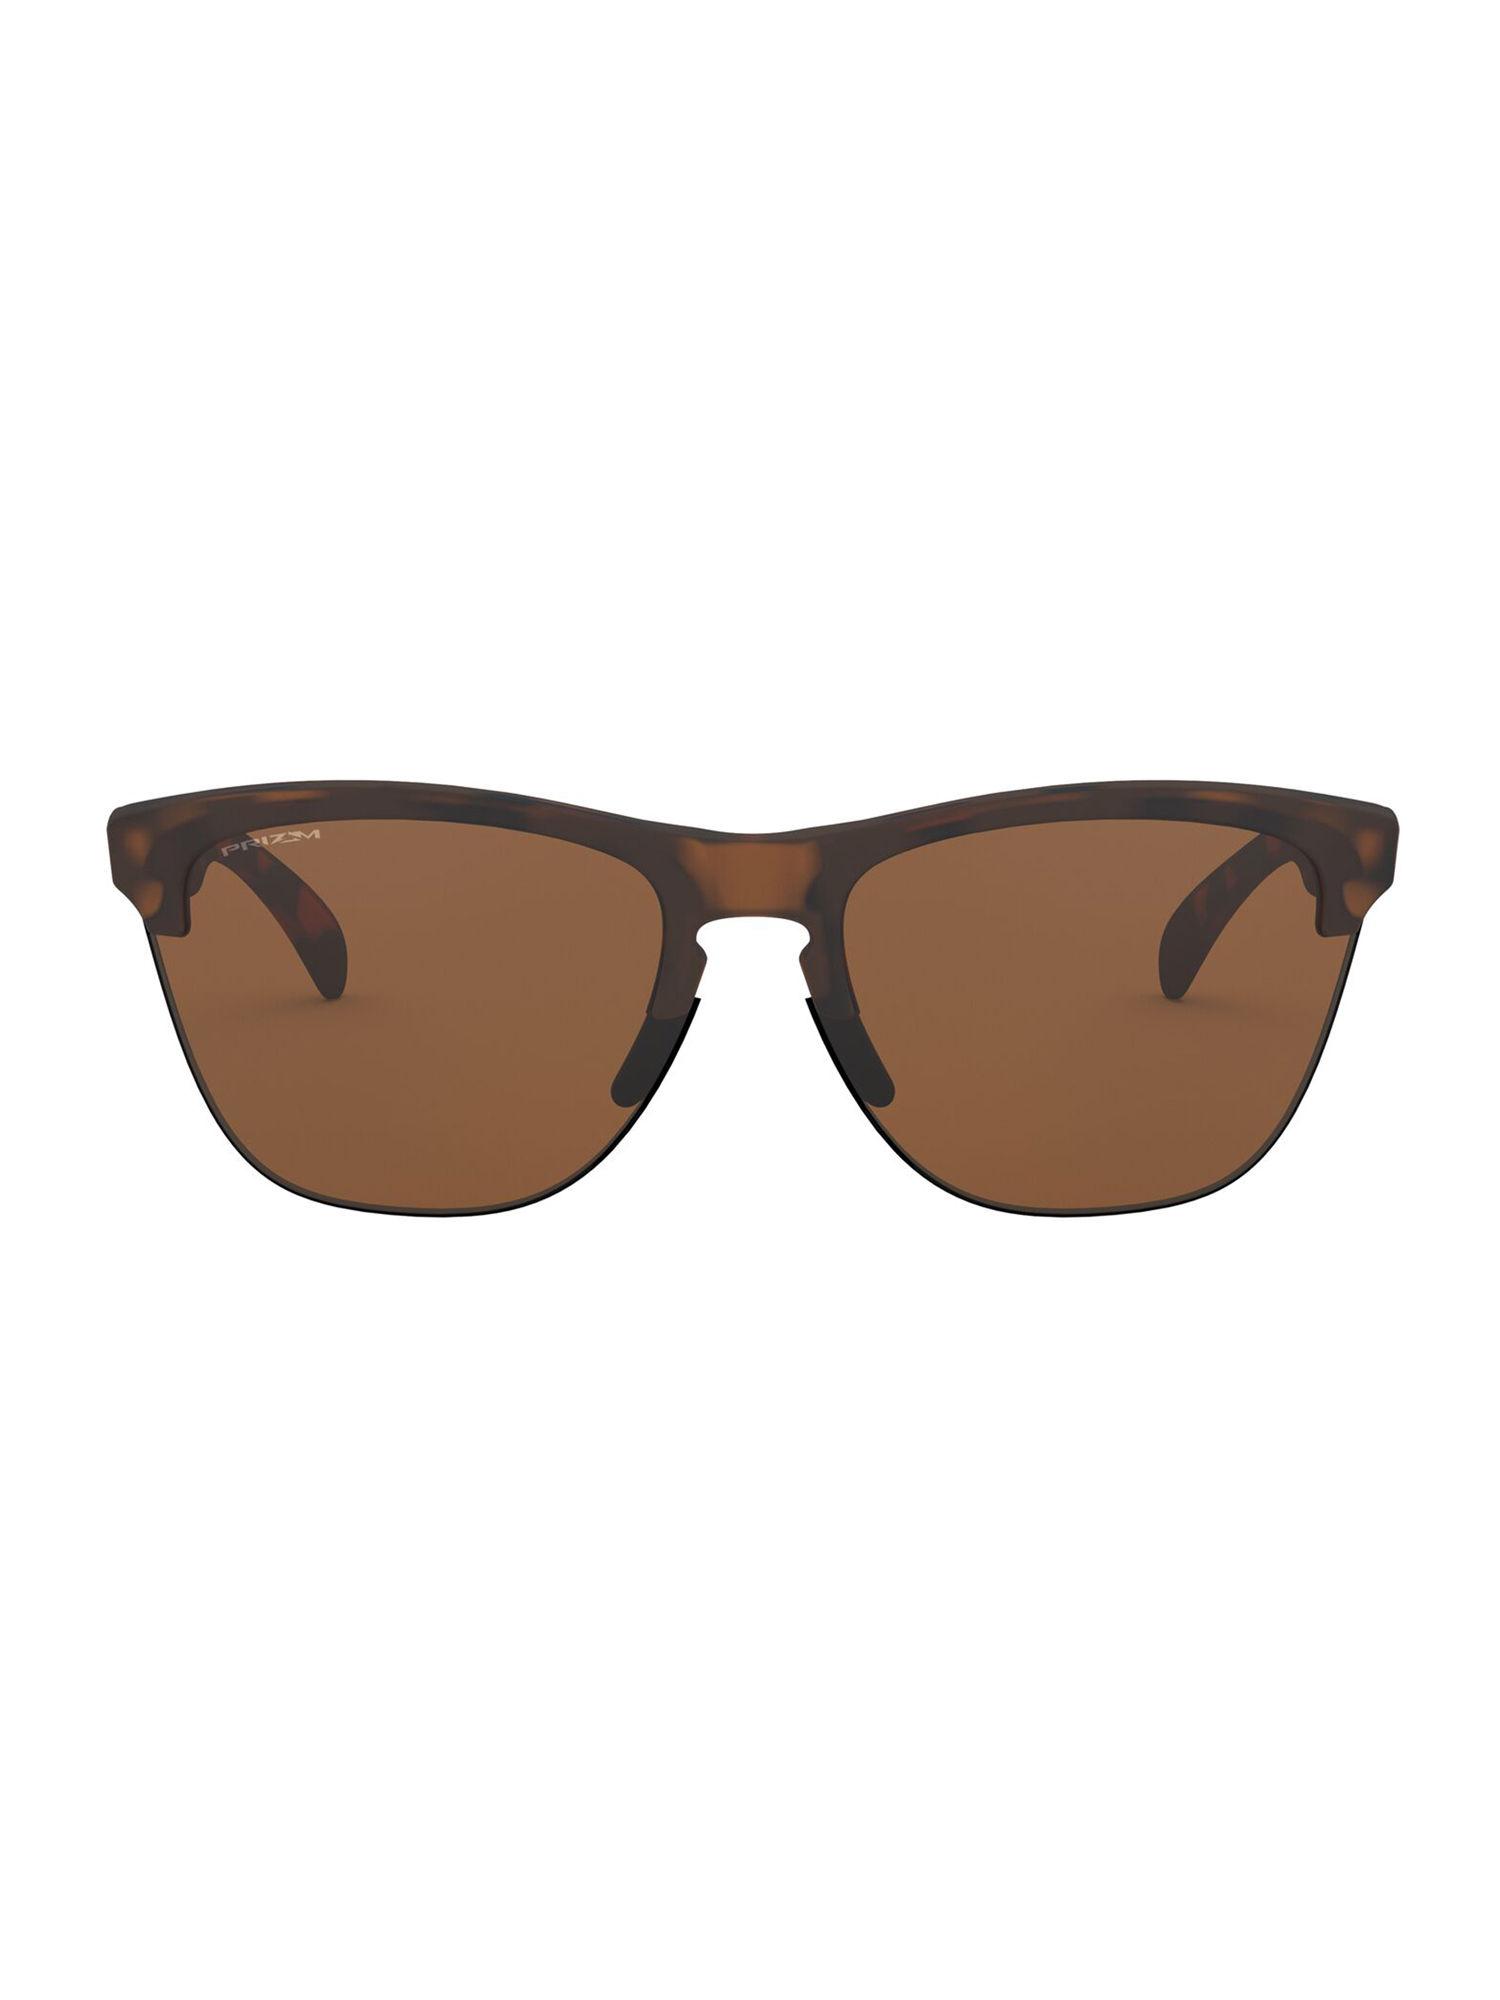 matte-brown-tortoise-sunglasses(0oo9374i|round-|brown-frame|brown-lens-|63-mm-)